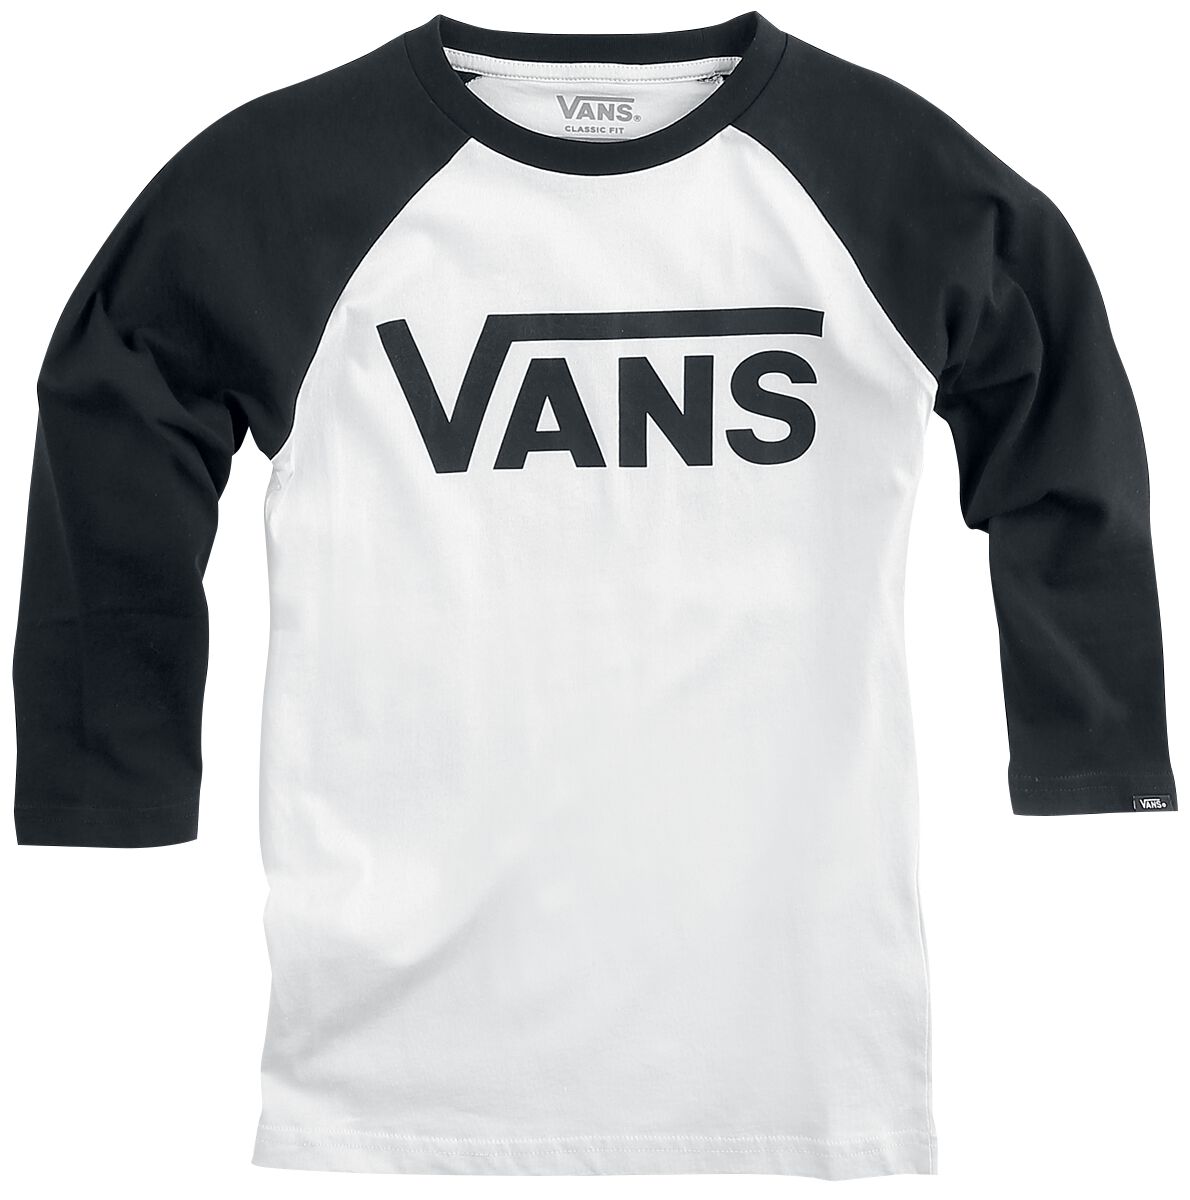 Vans Kids BY VANS Classic Raglan Langarmshirt schwarz weiß in XL